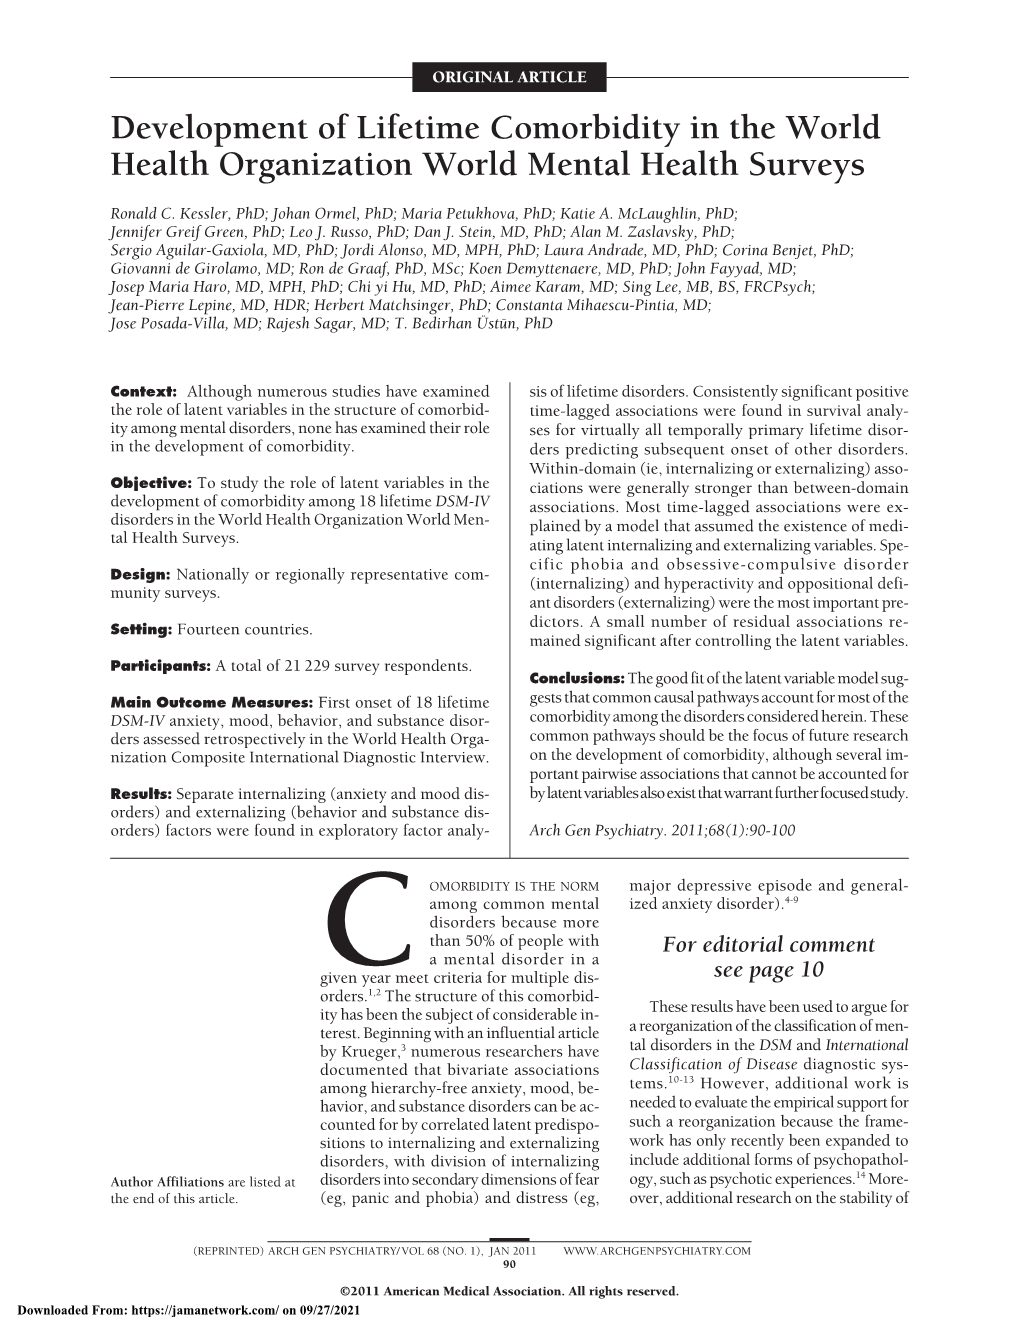 Development of Lifetime Comorbidity in the World Health Organization World Mental Health Surveys